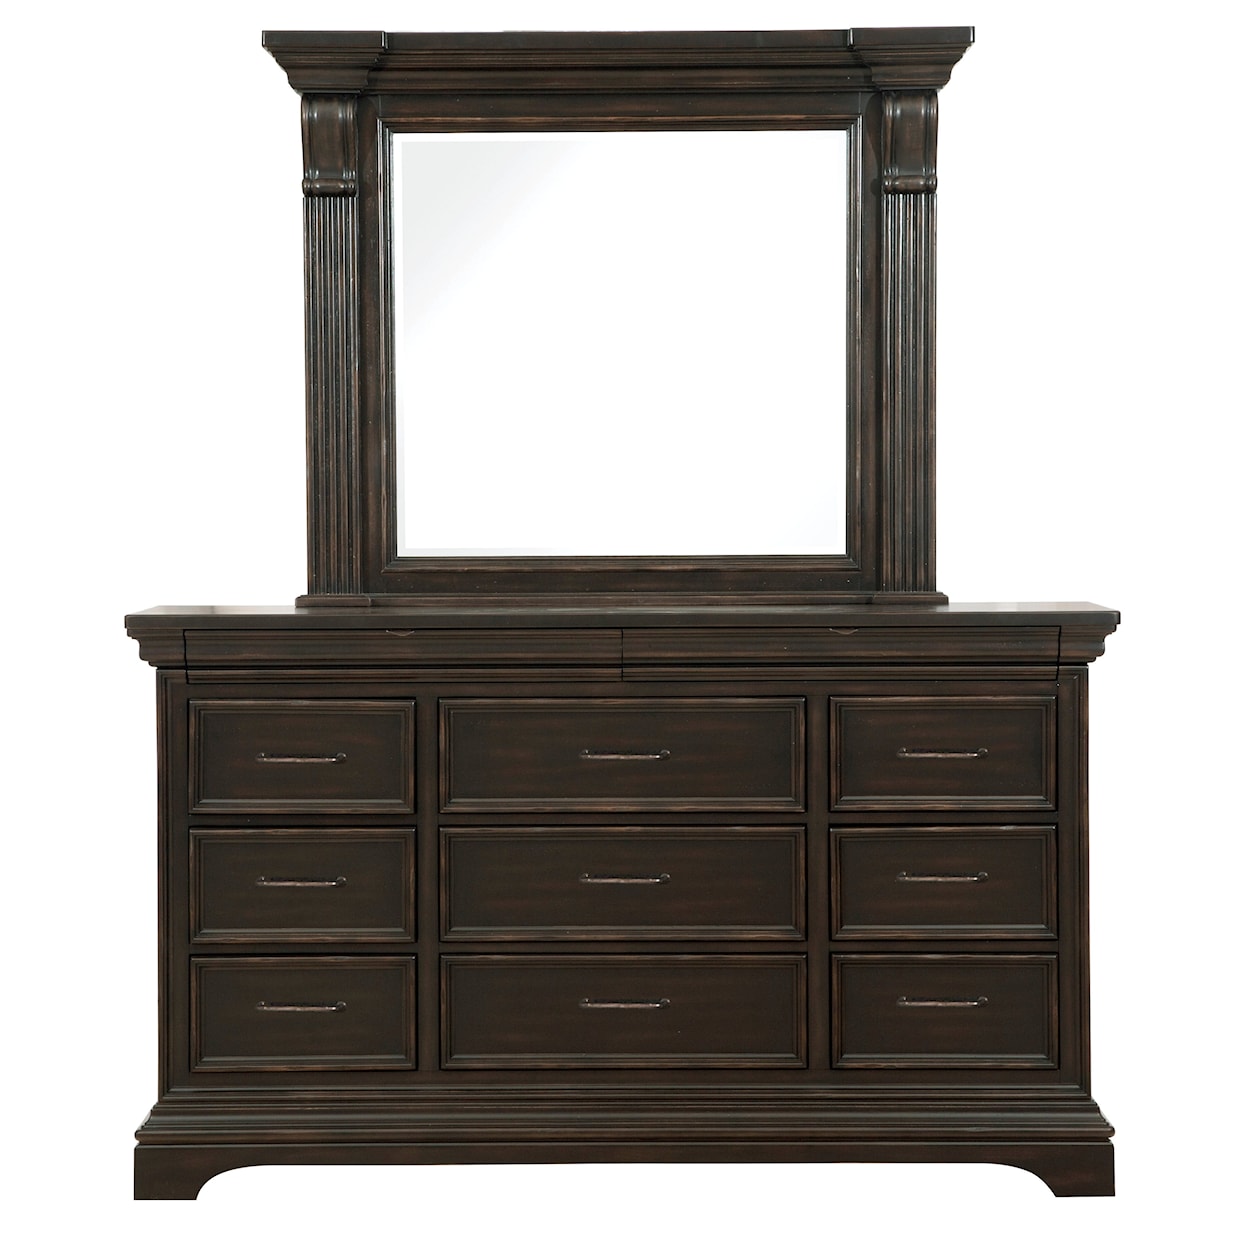 Pulaski Furniture Caldwell Dresser with Mirror